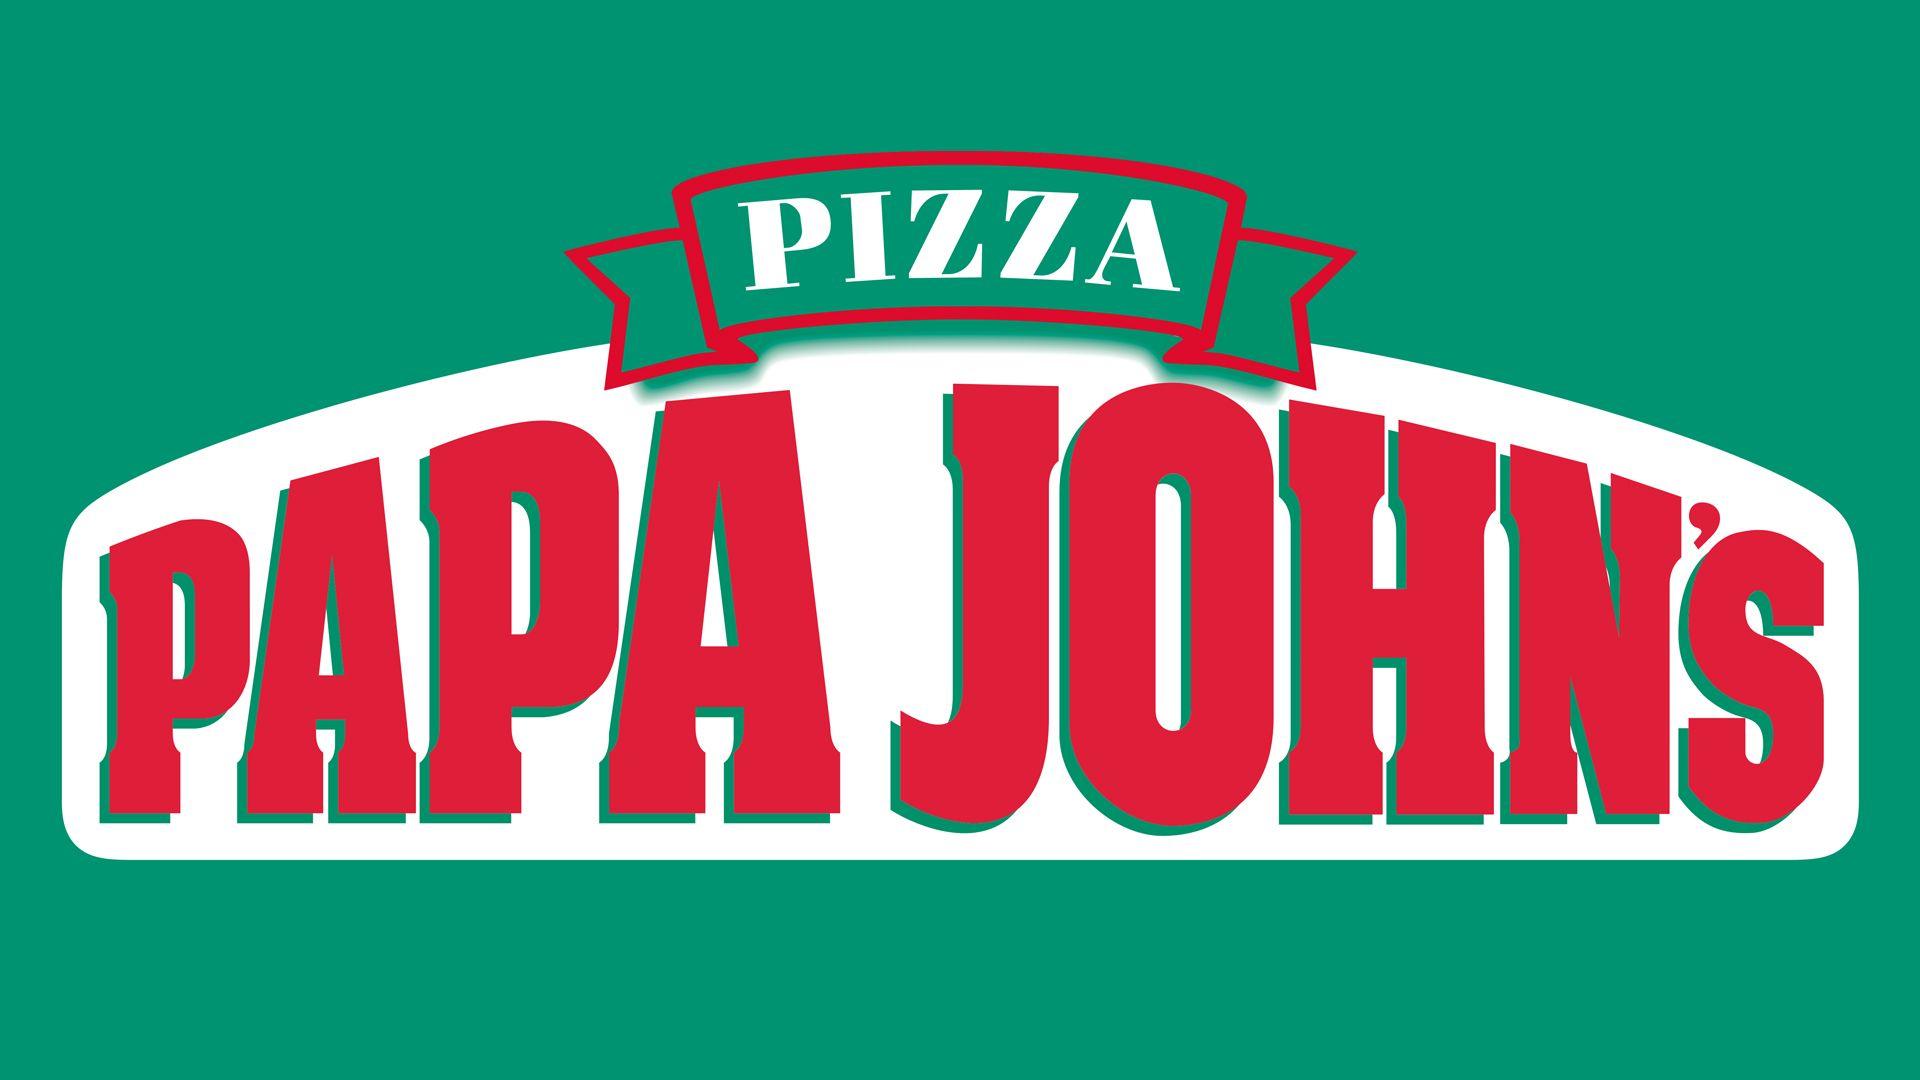 John Logo - Papa Johns Logo, Papa Johns Symbol, Meaning, History and Evolution